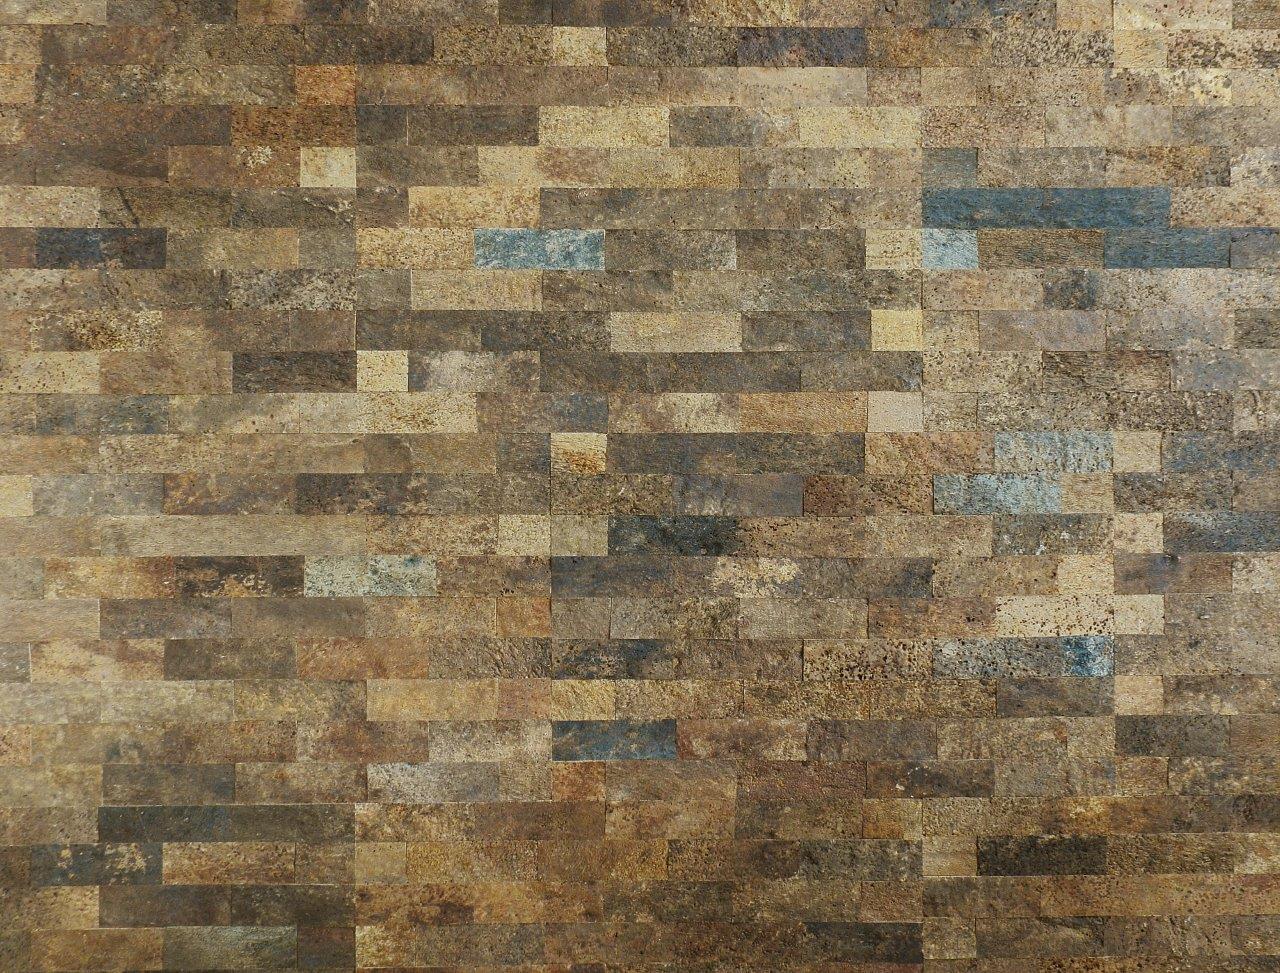 Ziro Wanddesign, Wandkork roh Colonial, aus massiver Korkrinde Zum Verkleben - 7 x 930 x 630 mm